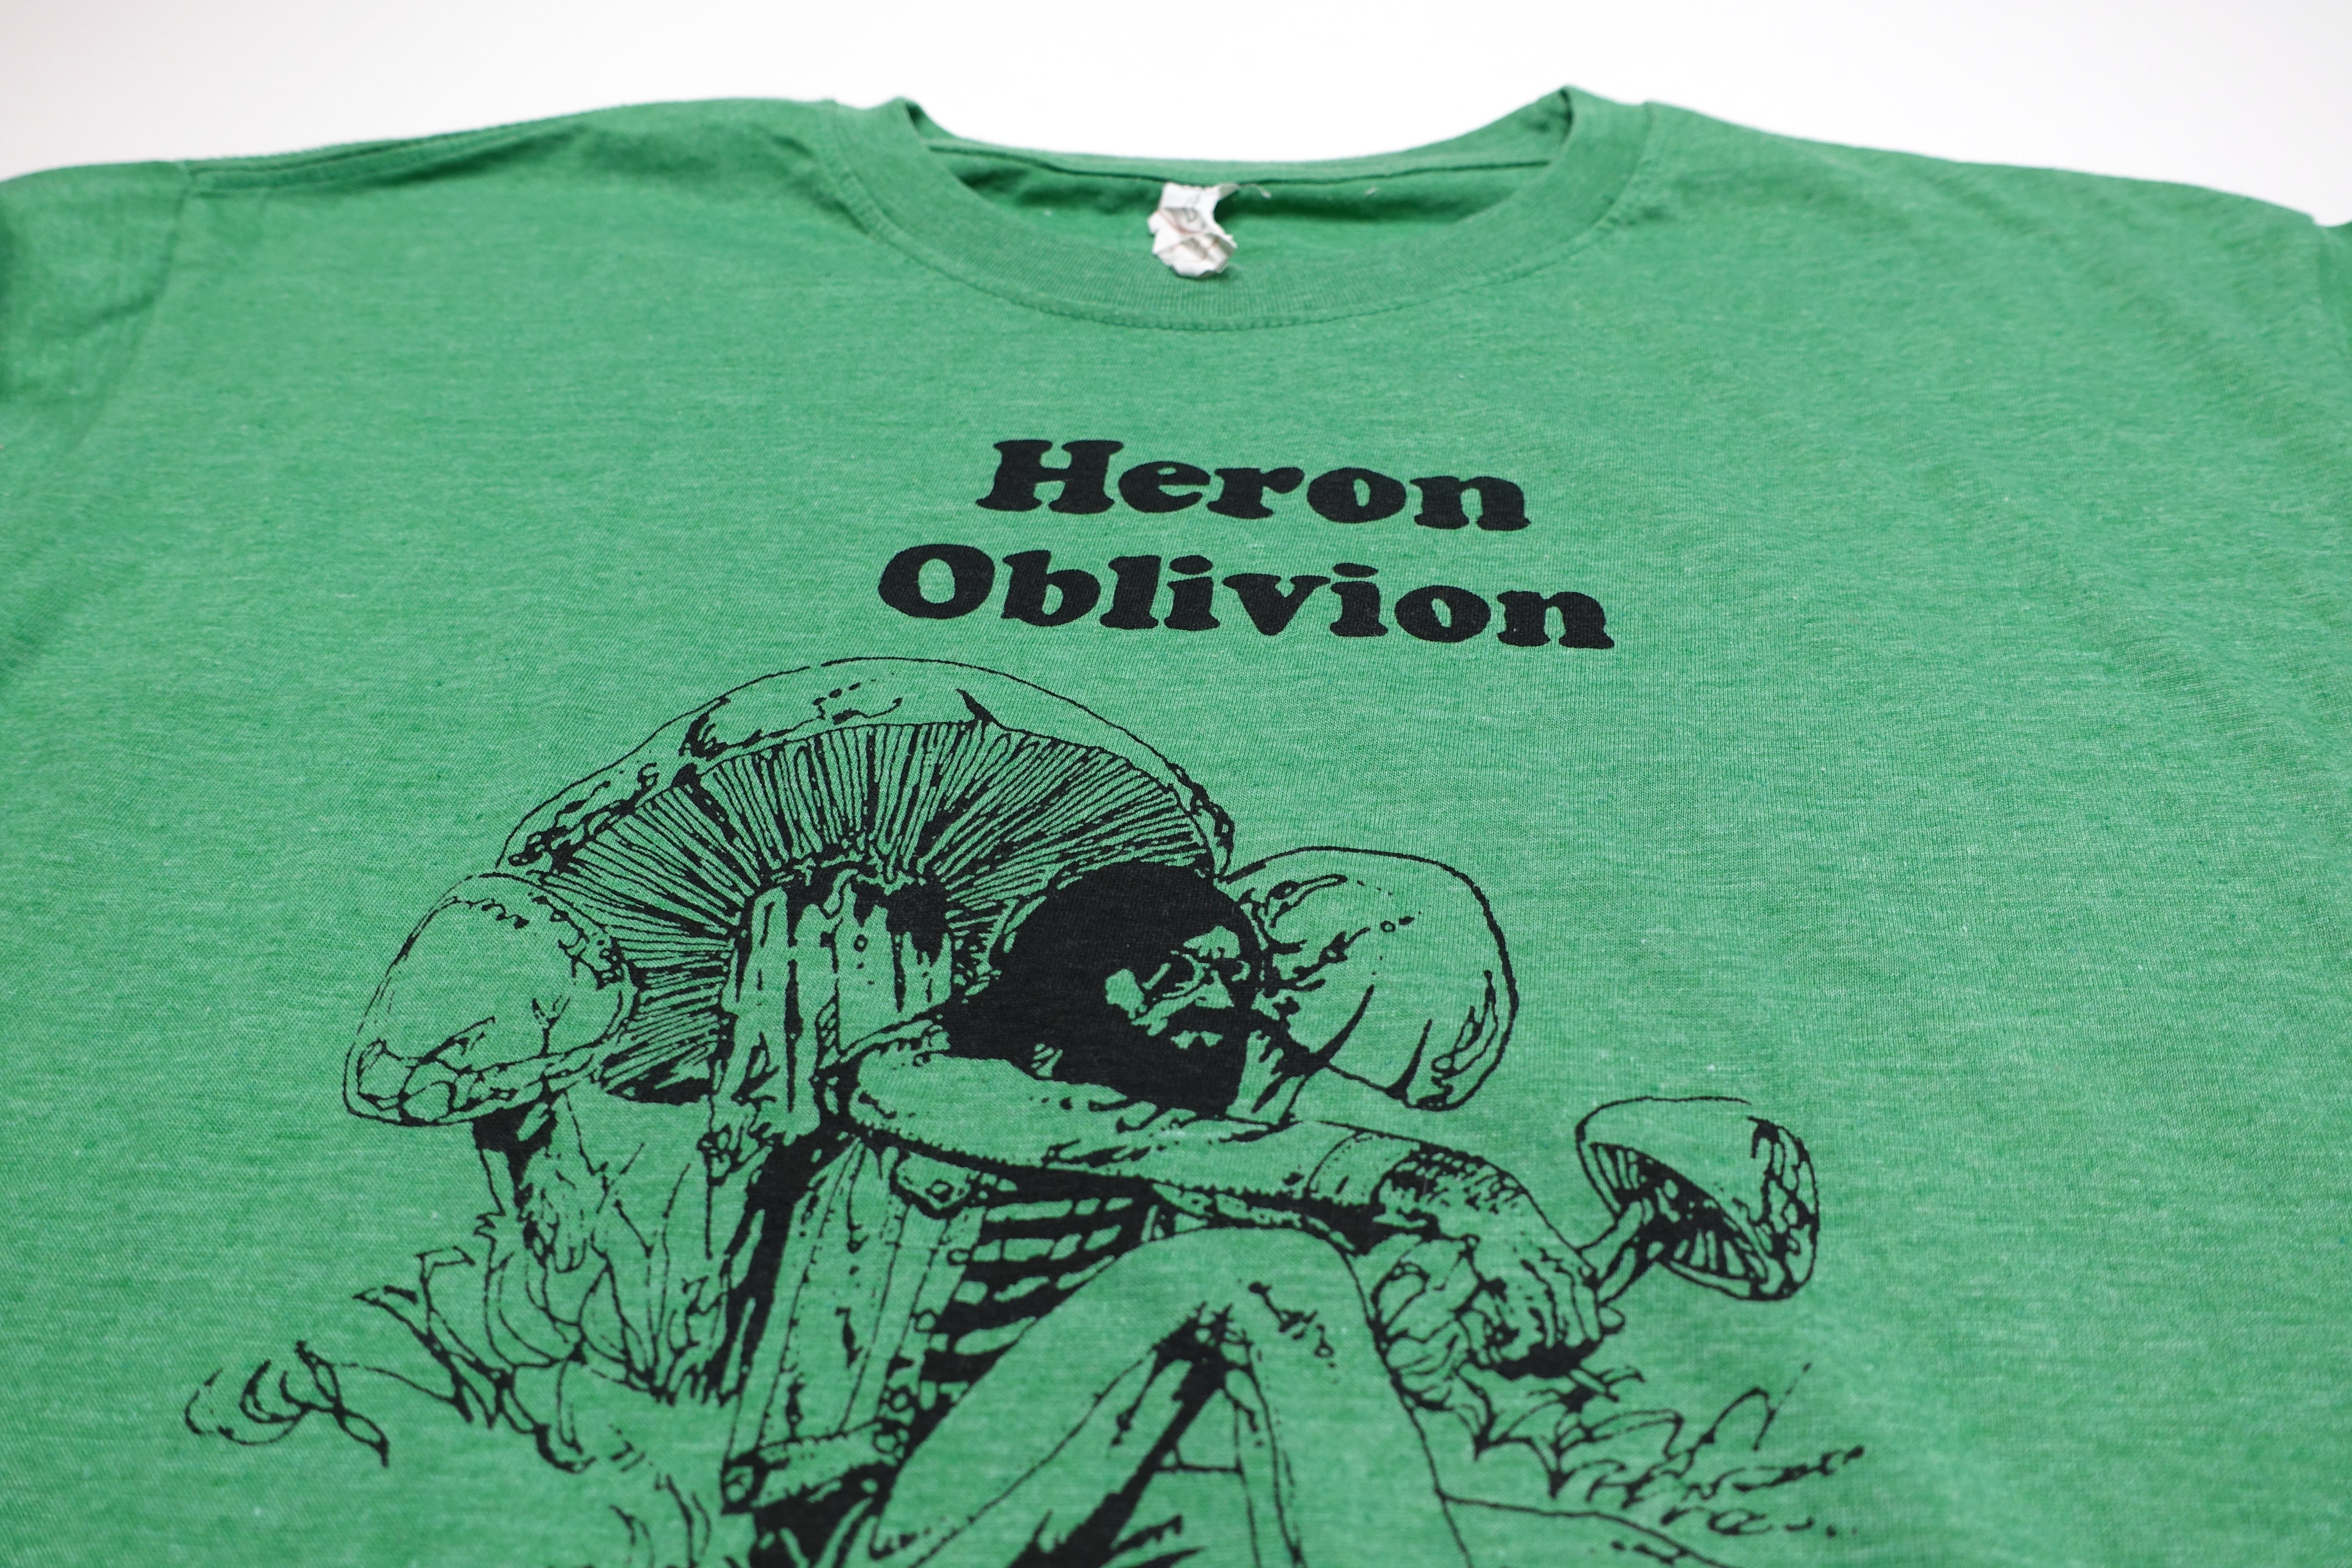 Heron Oblivion – Shroomin' Biker 2016 Tour Shirt Size Large